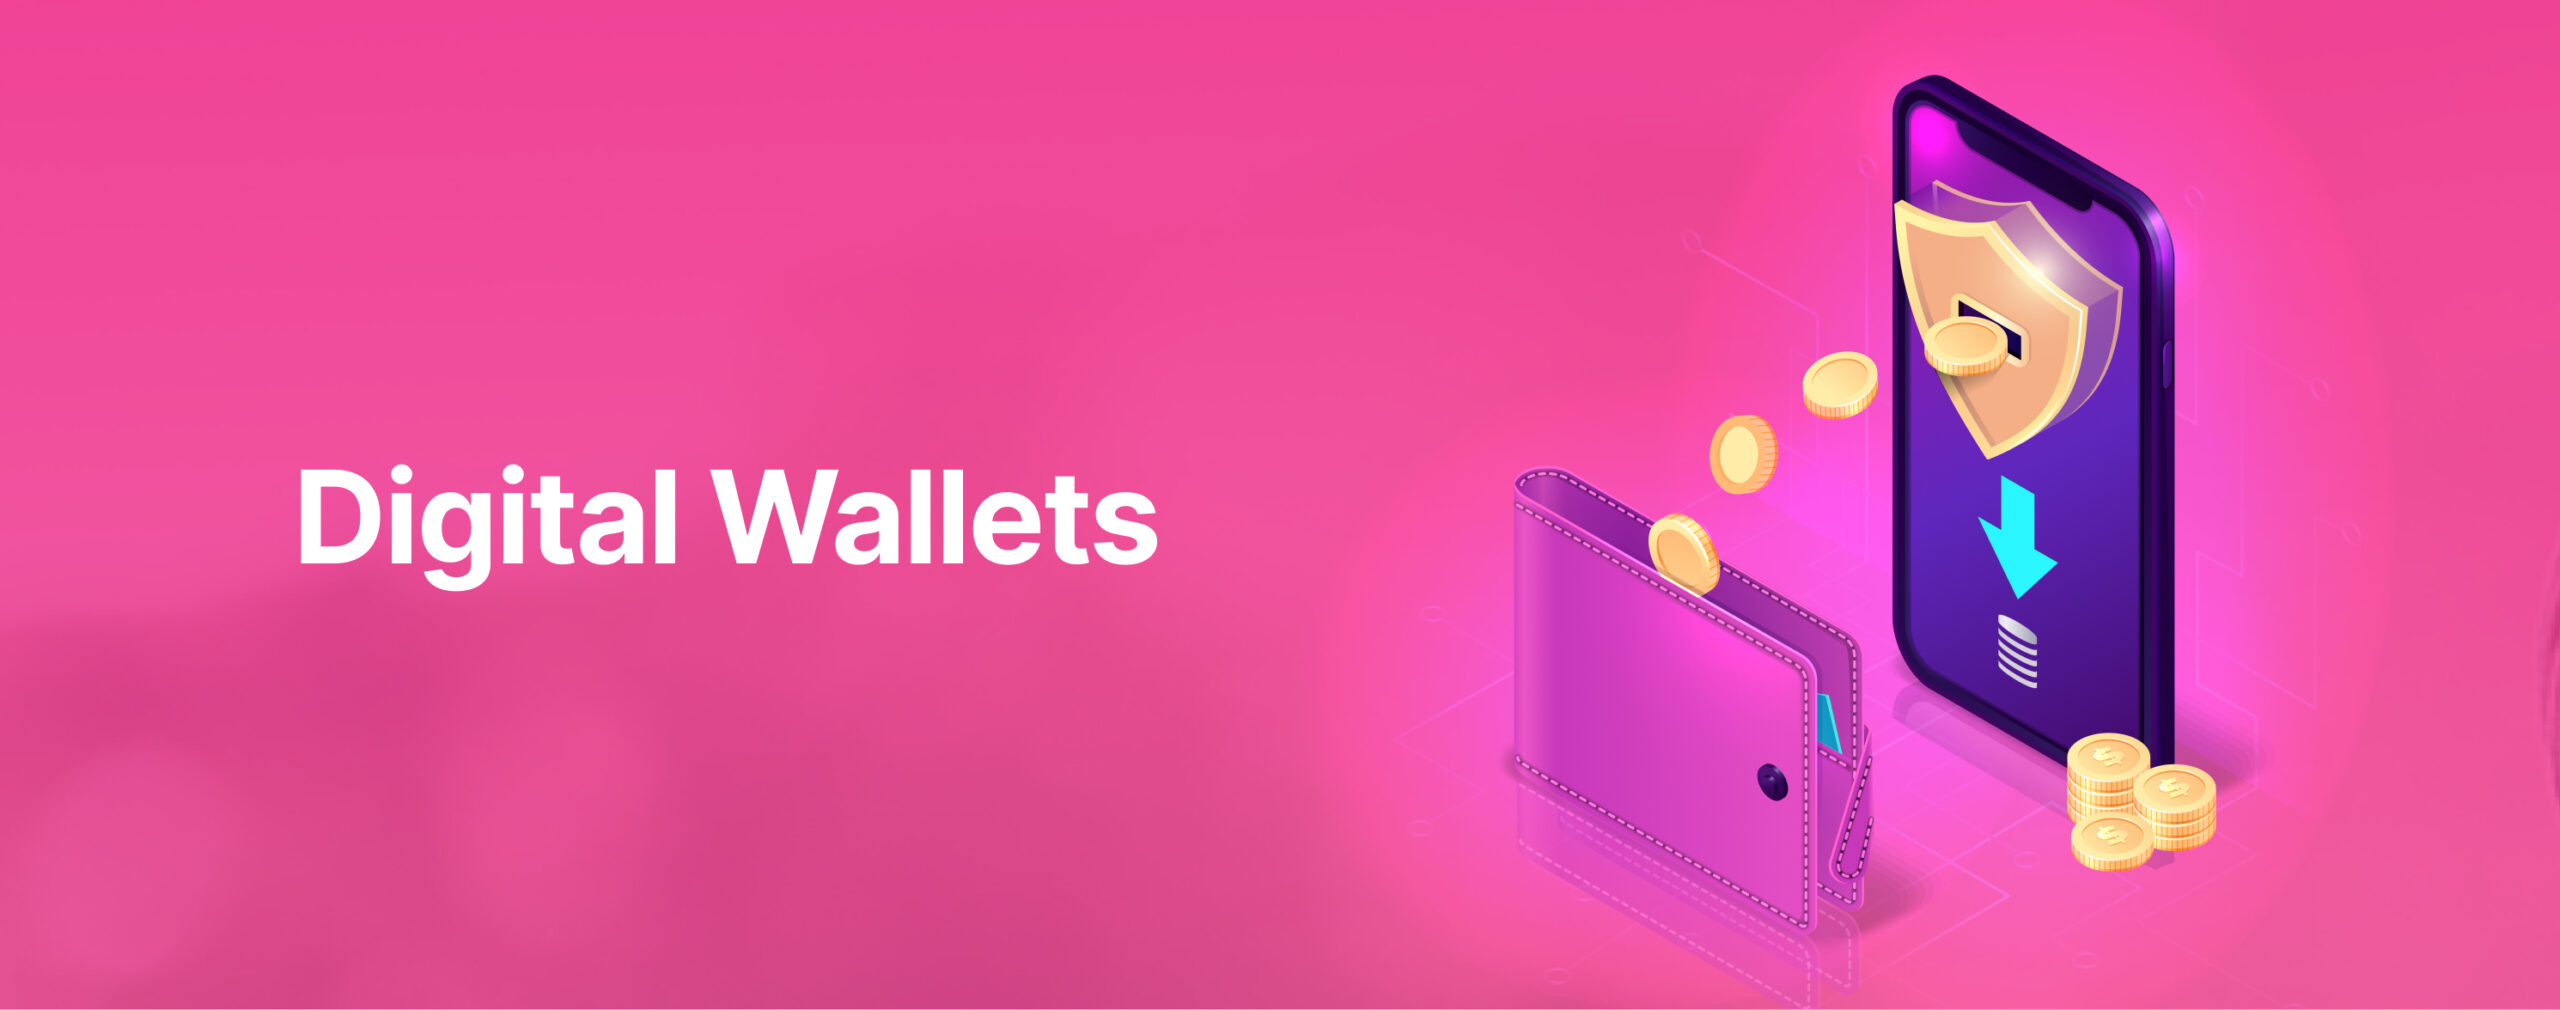 Digital wallets